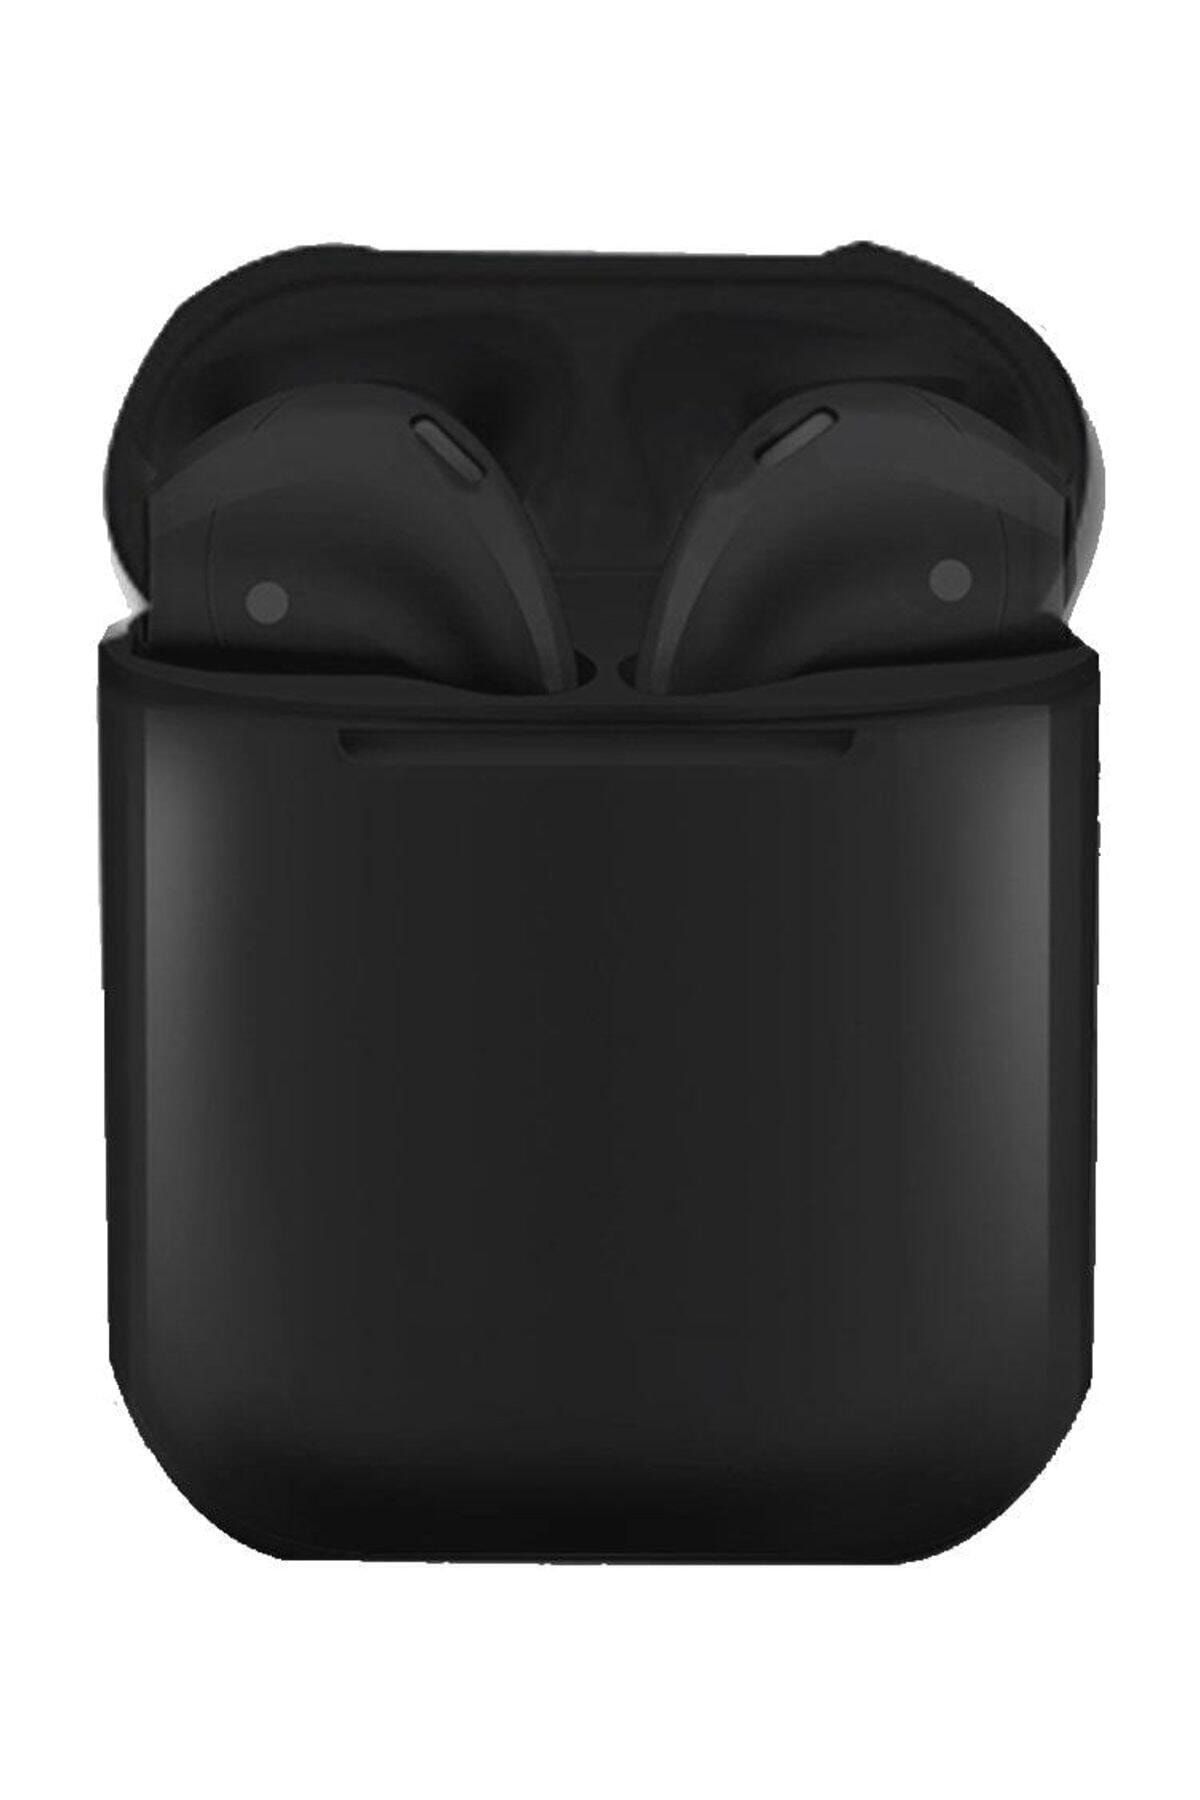 Genel Markalar Tws I12 Siyah Ios Android Universal Bluetooth Kulaklık Hd Ses Kalitesi I12